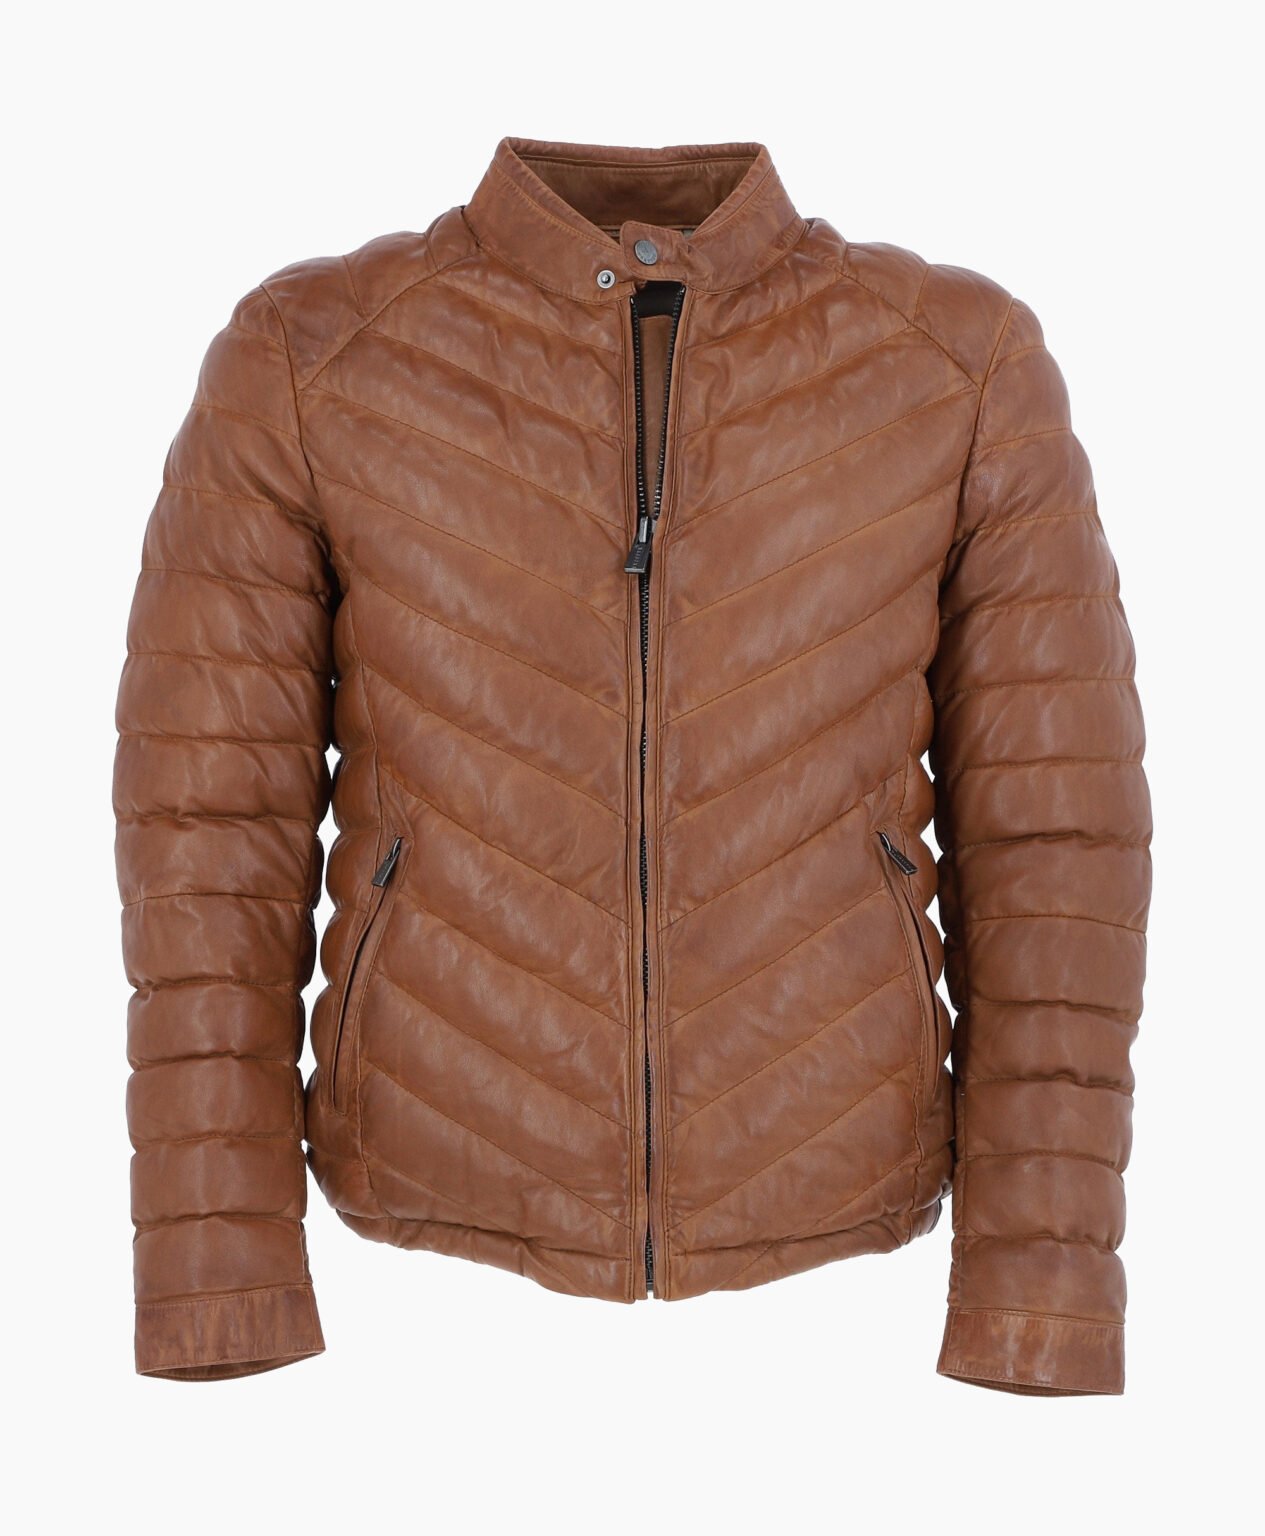 vogue-jacket-leather-puffer-jacket-tan-prescott-image200